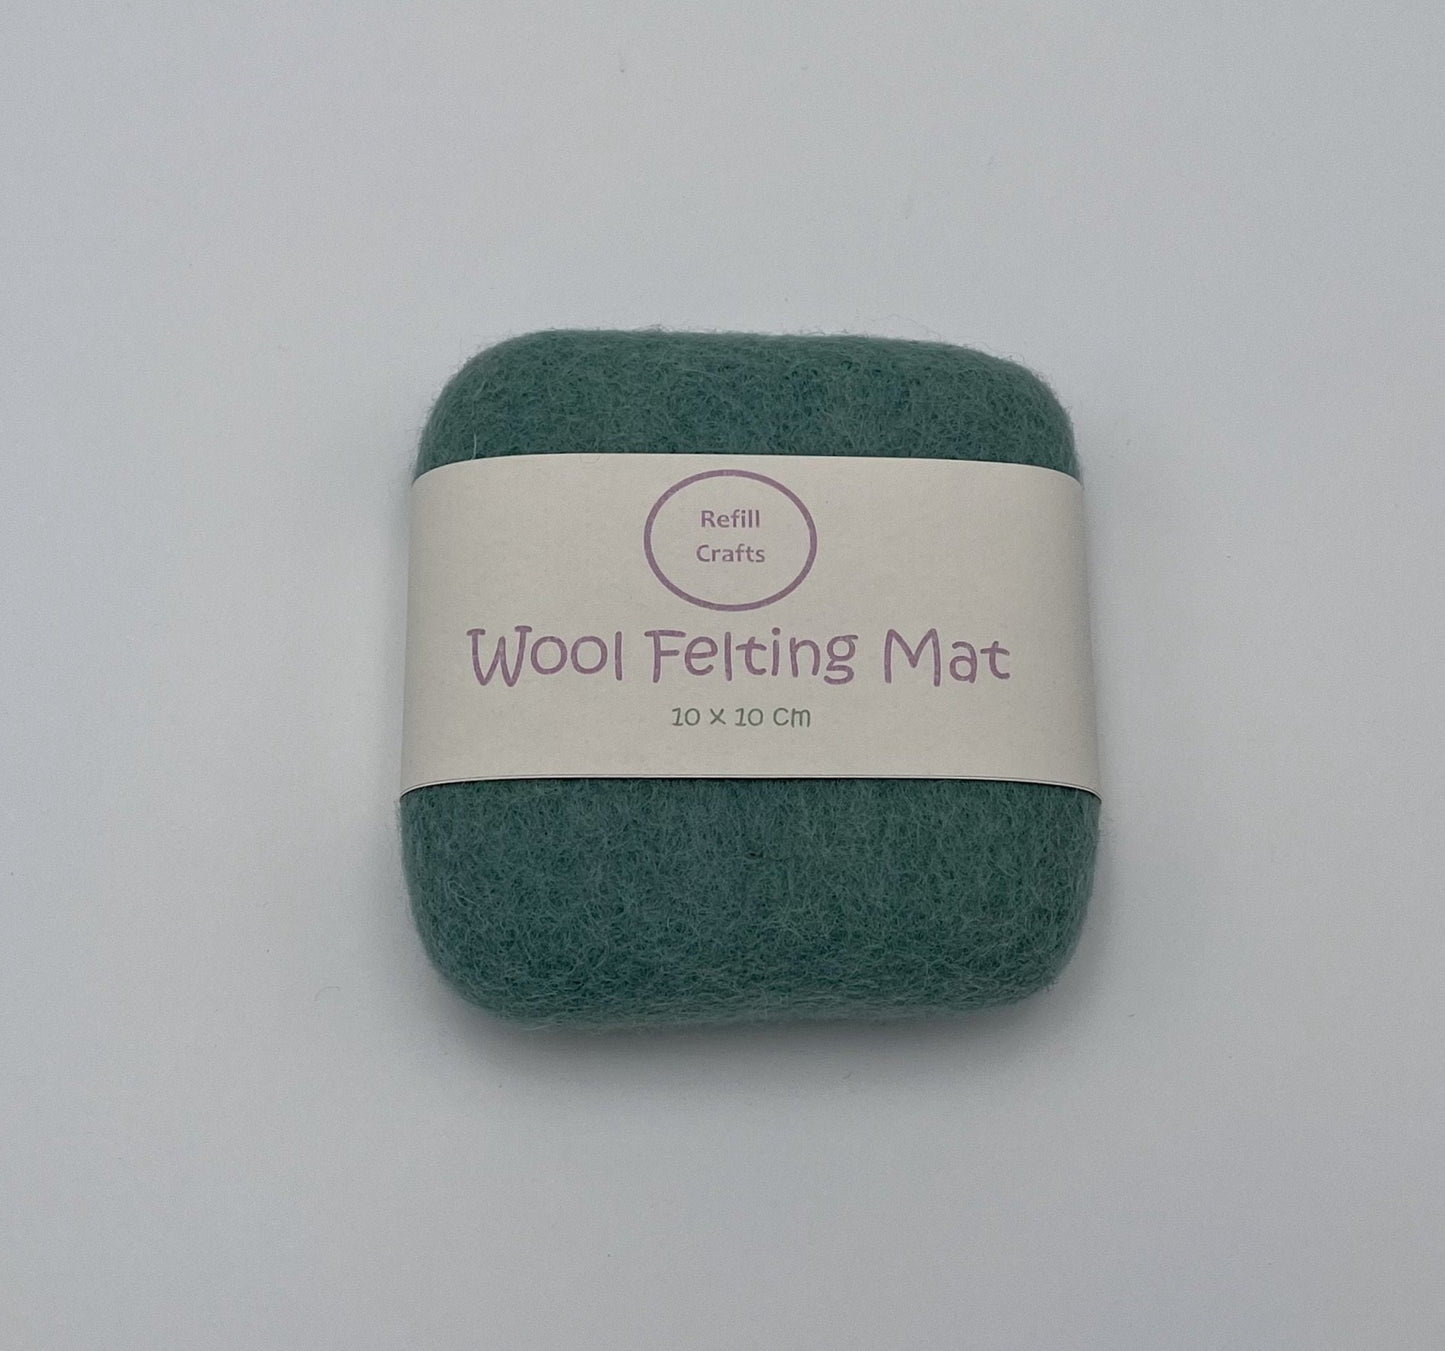 Green wool needle felting mat 10 x 10 cm